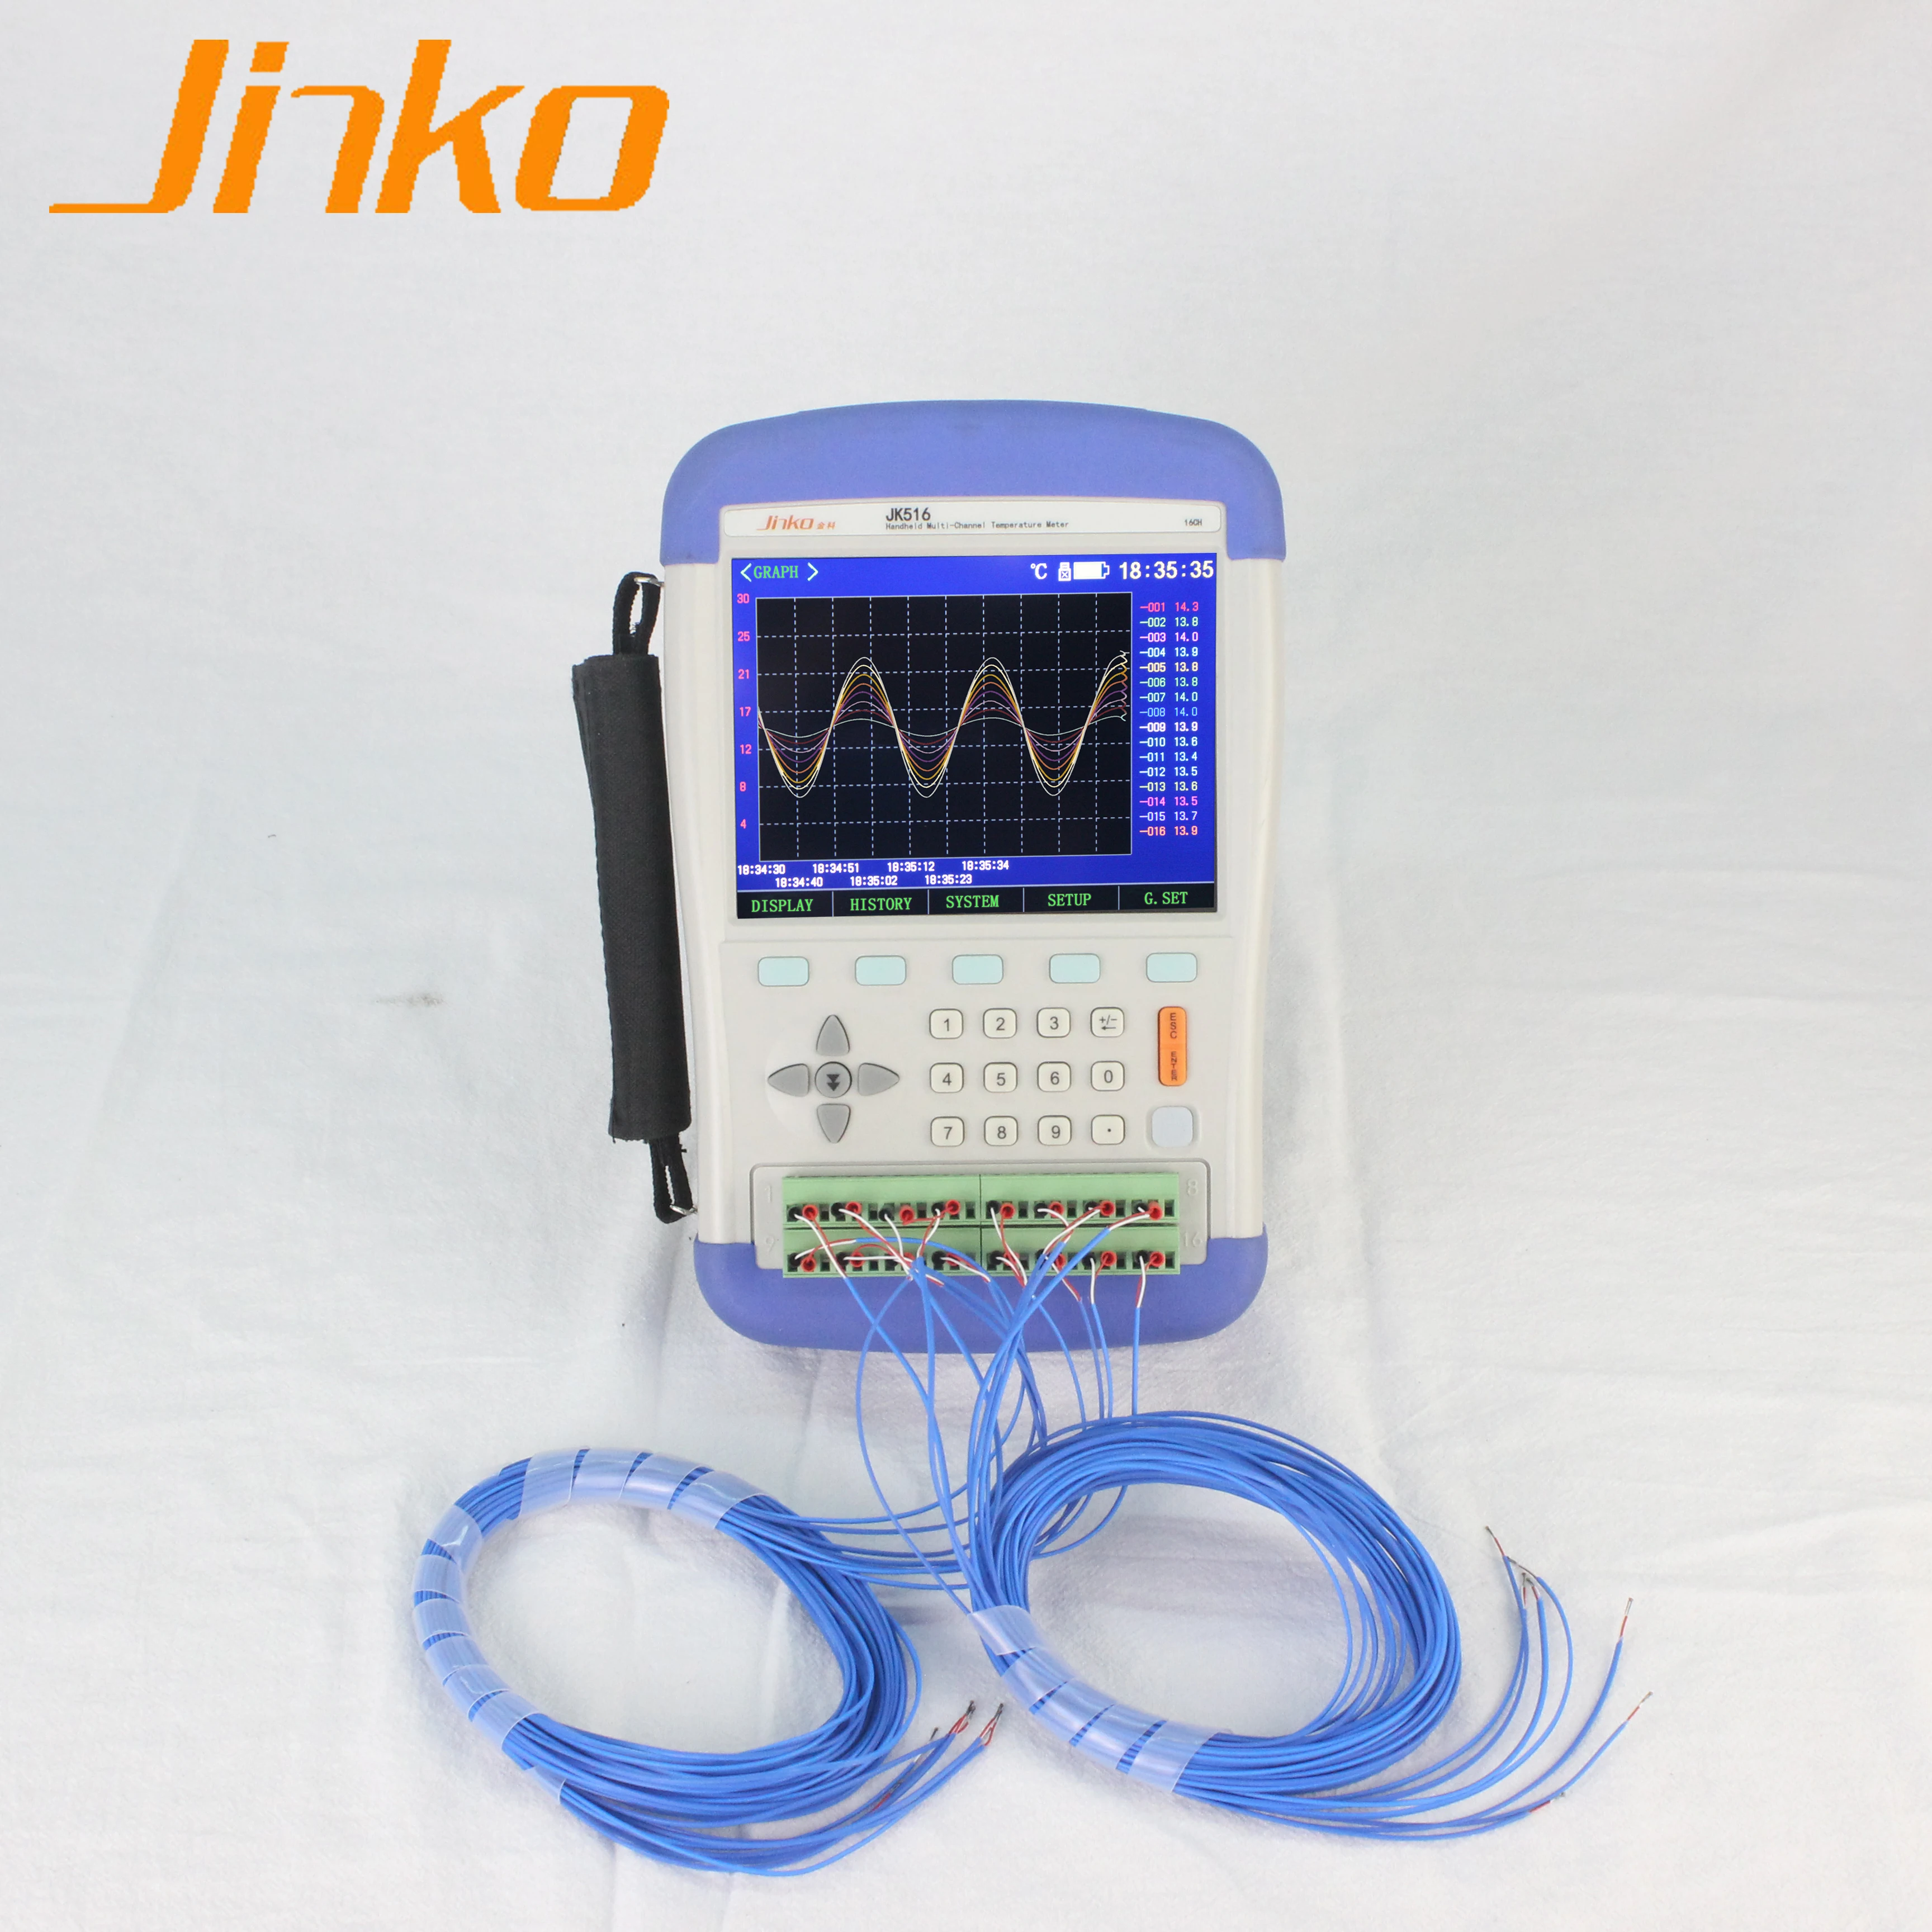 

Jinko JK516 Handheld multi channel Temperature Data Logger pt100 data logger 16 channels Temperature Data recorder